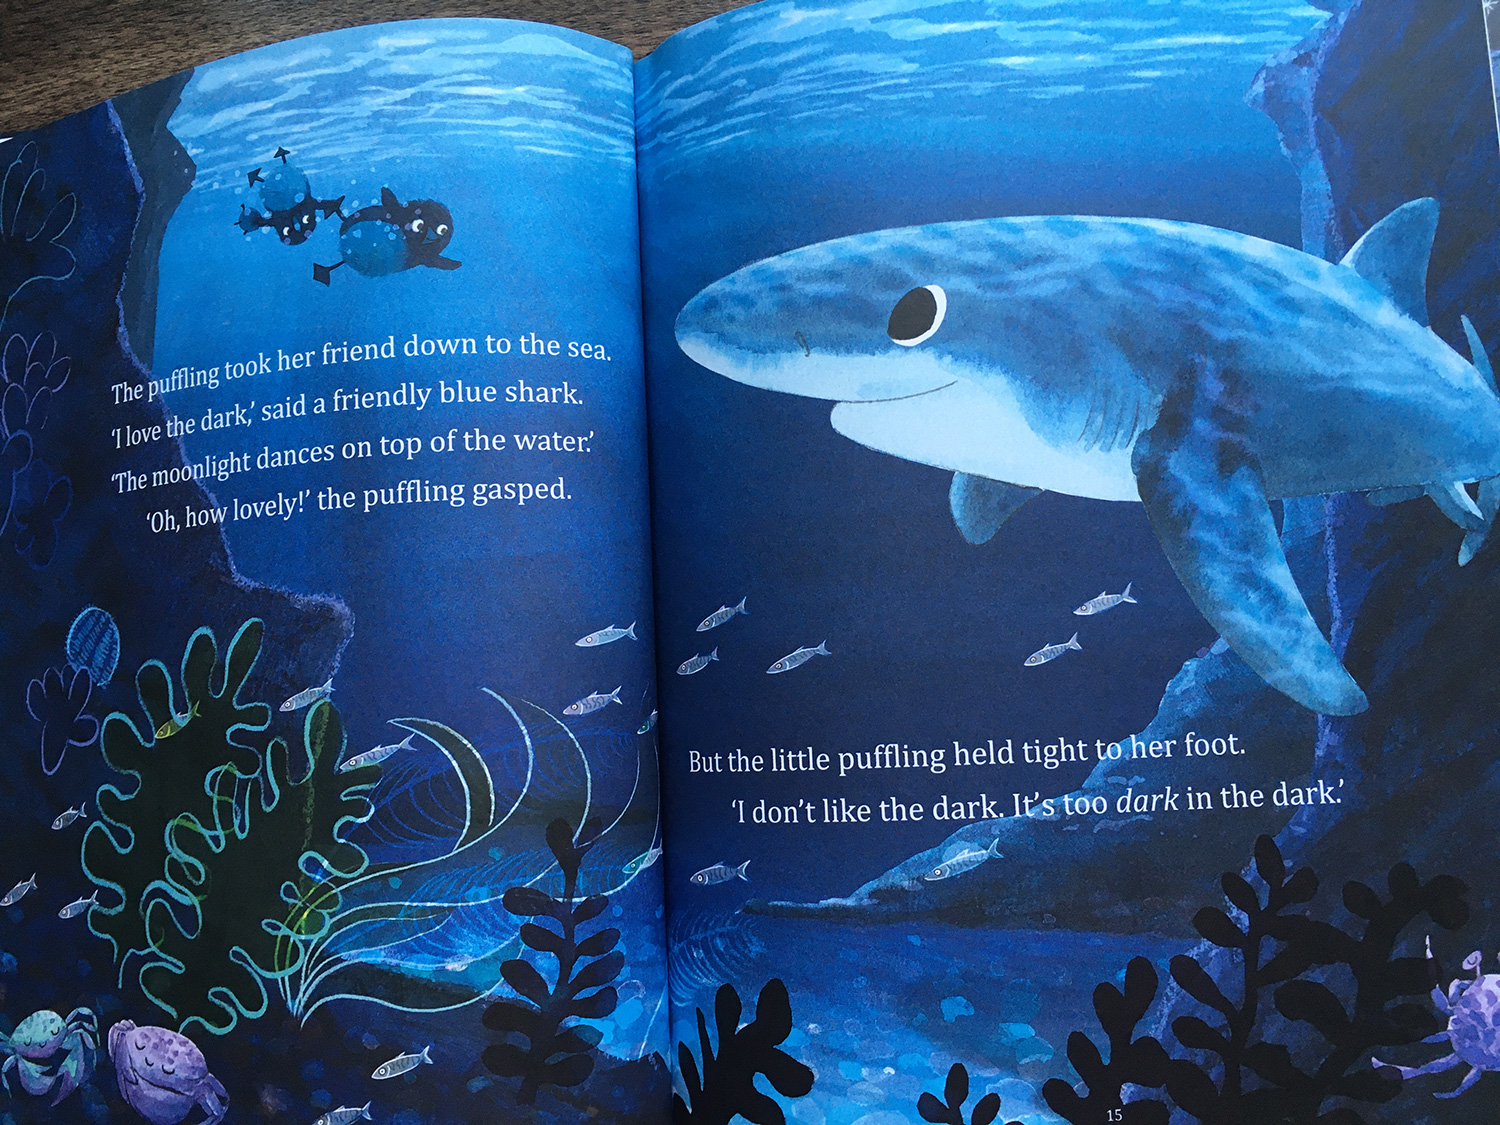 It's Too Dark, Puffling - scene where the two pufflings meet a blue shark in the sea